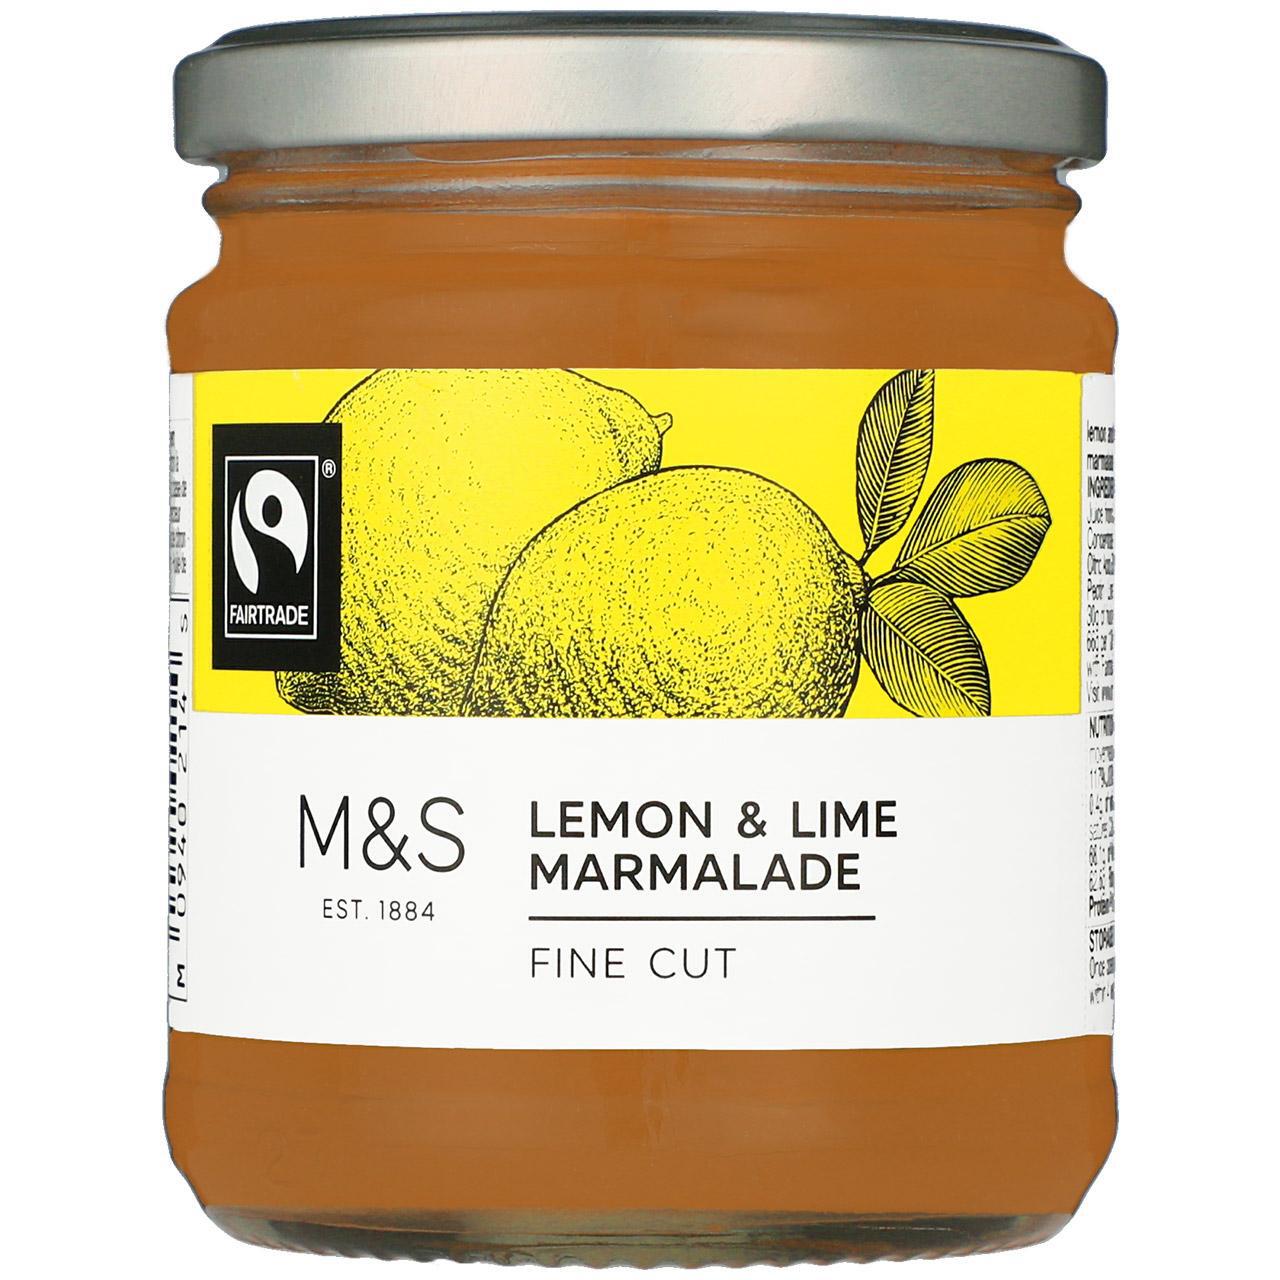 M&S Fair Trade Lemon & Lime Marmalade 340g